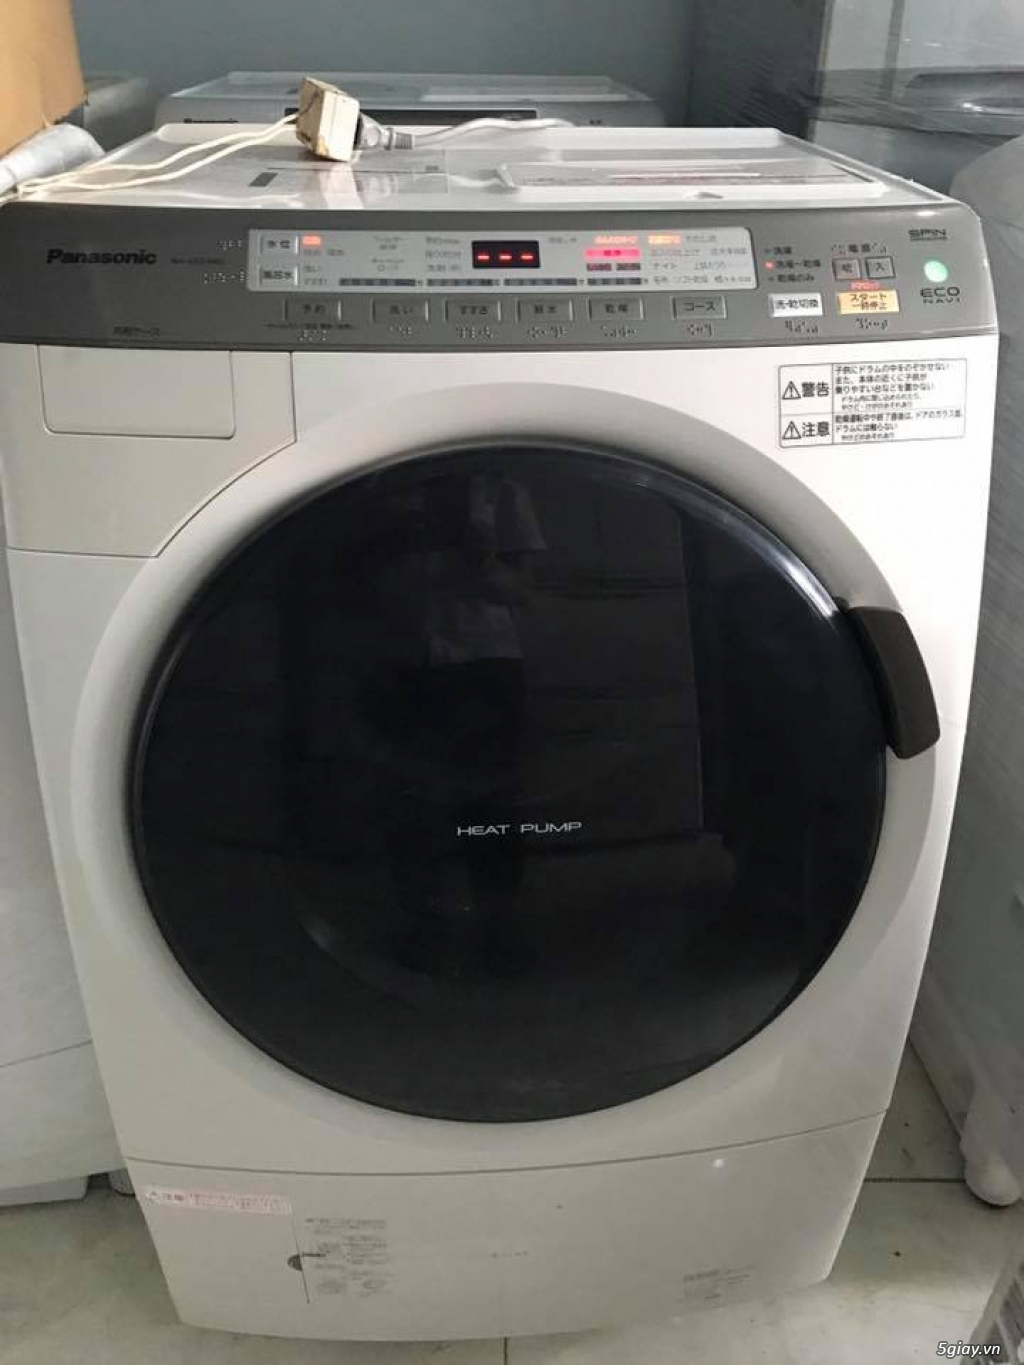 Máy giặt Panasonic, National, Toshiba kết hợp máy sấy